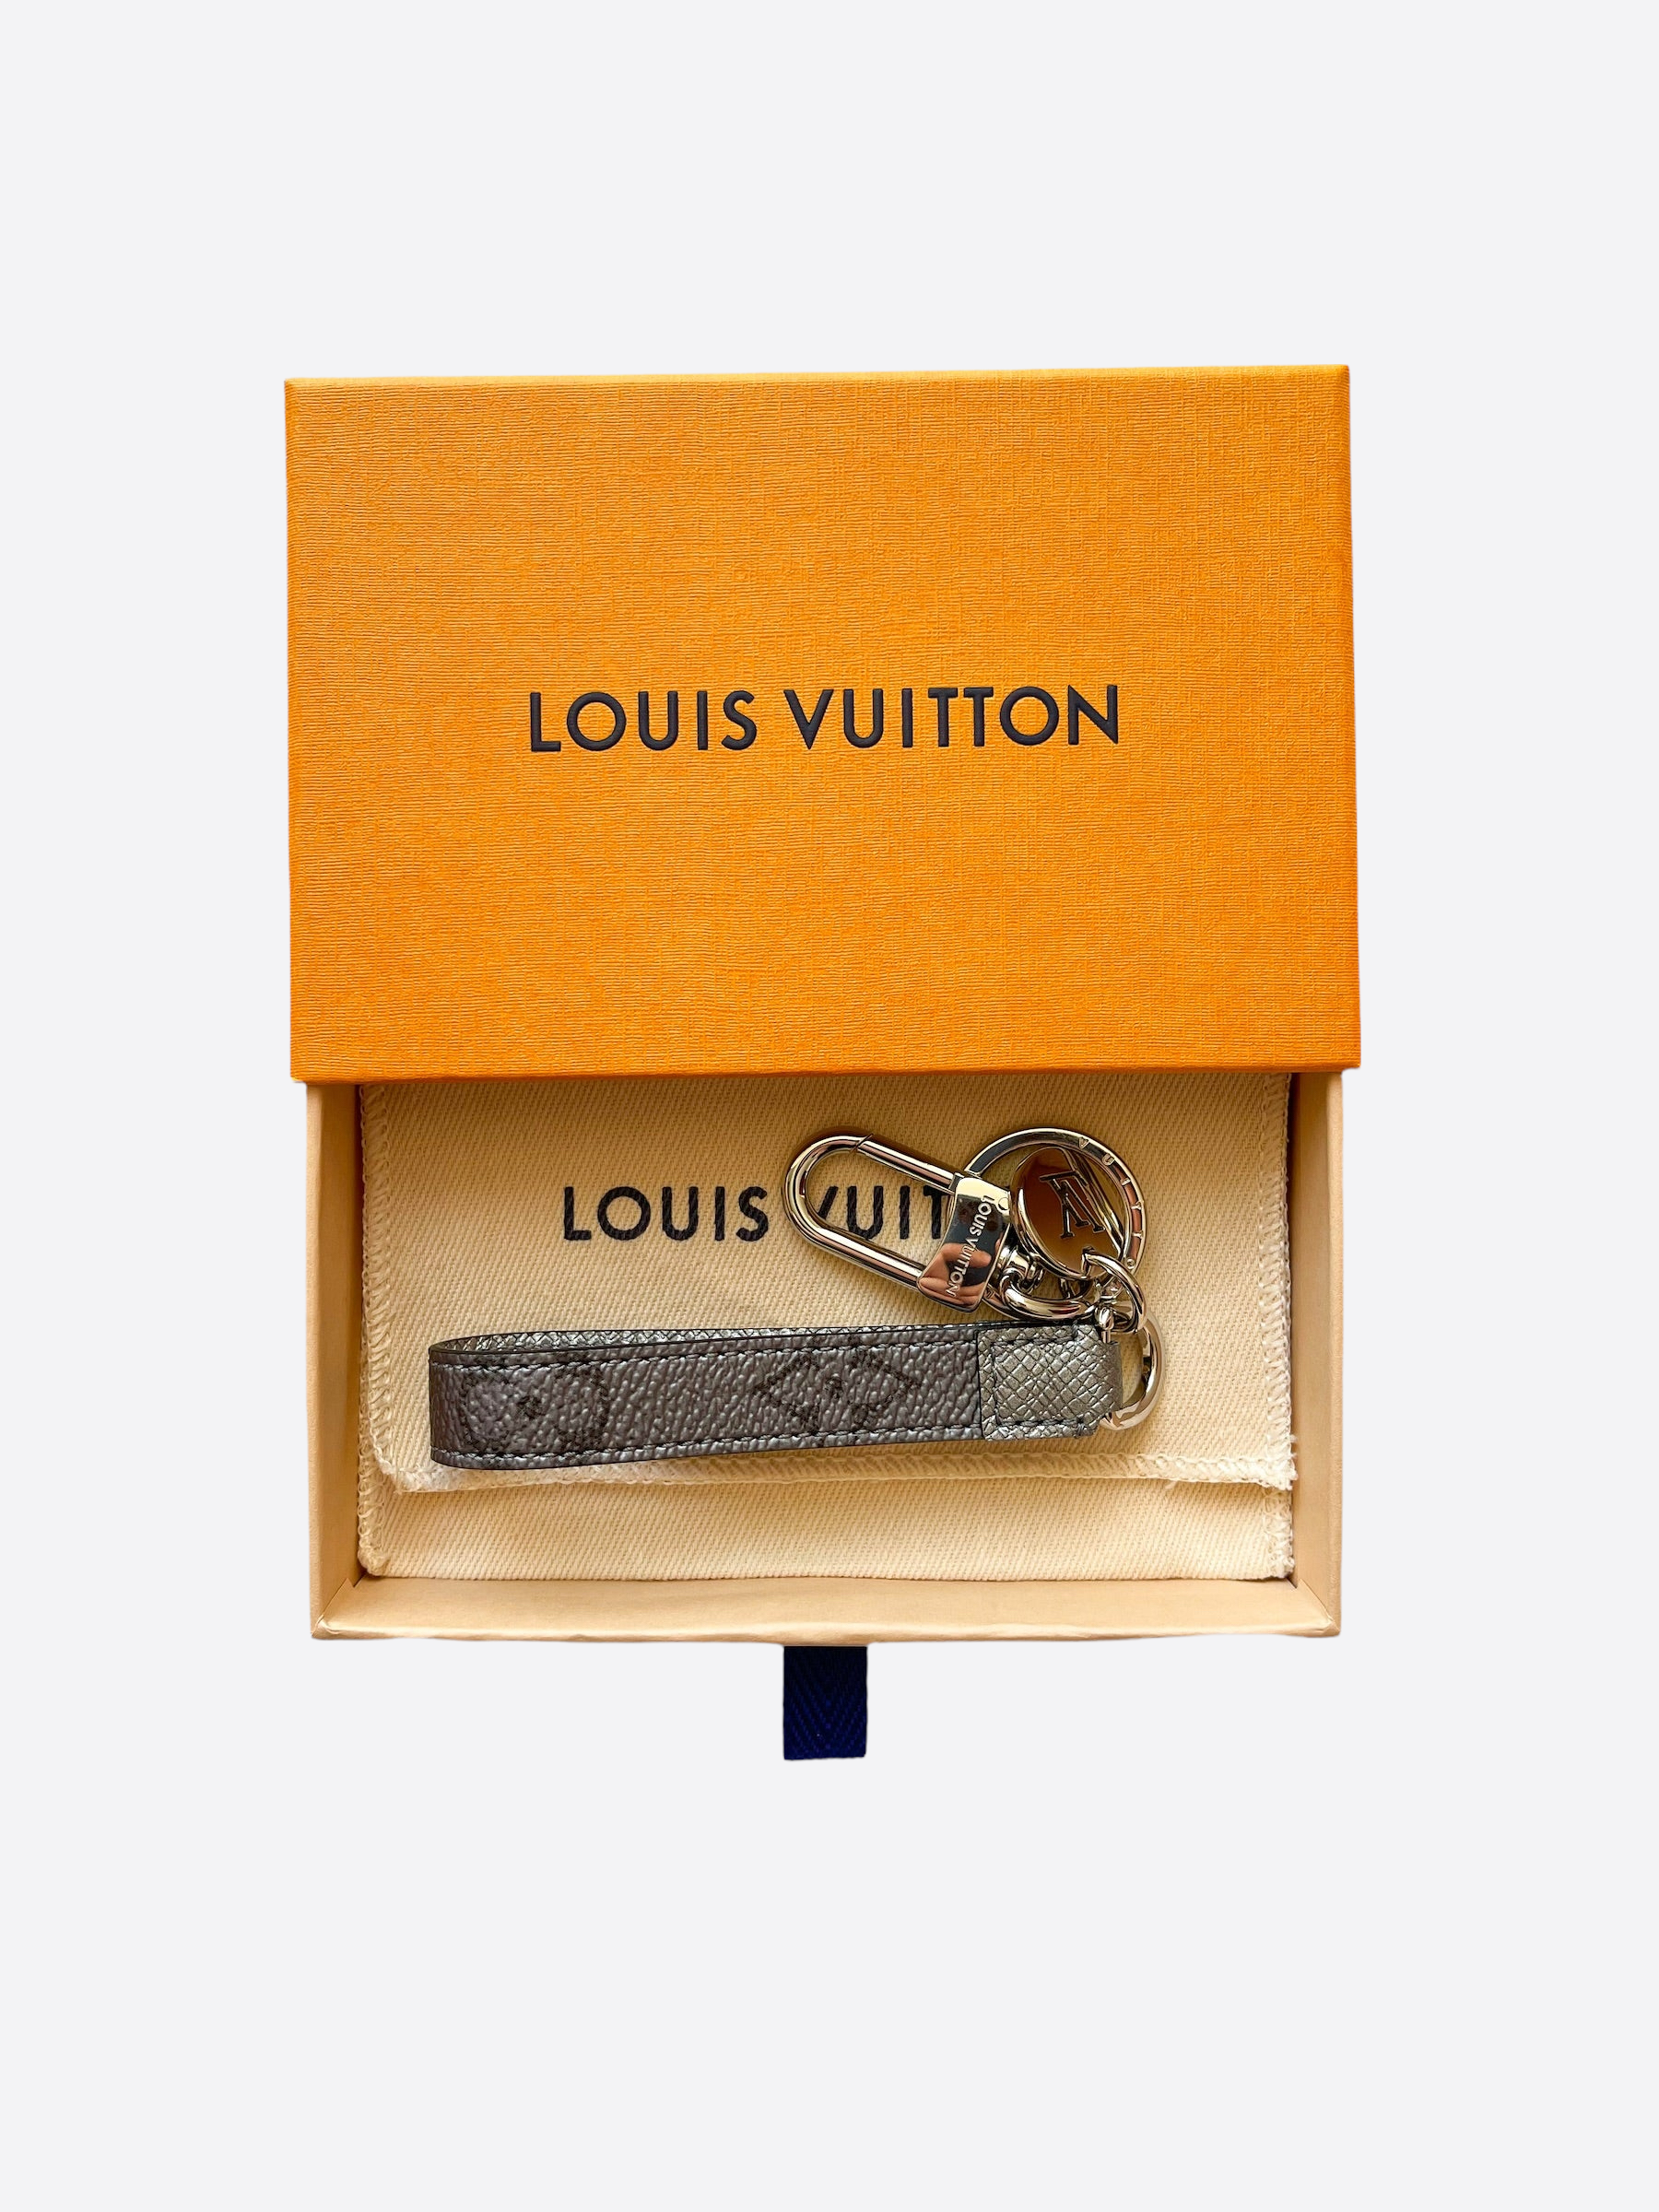 Louis Vuitton Silver Monogram Bag Charm & Key Holder